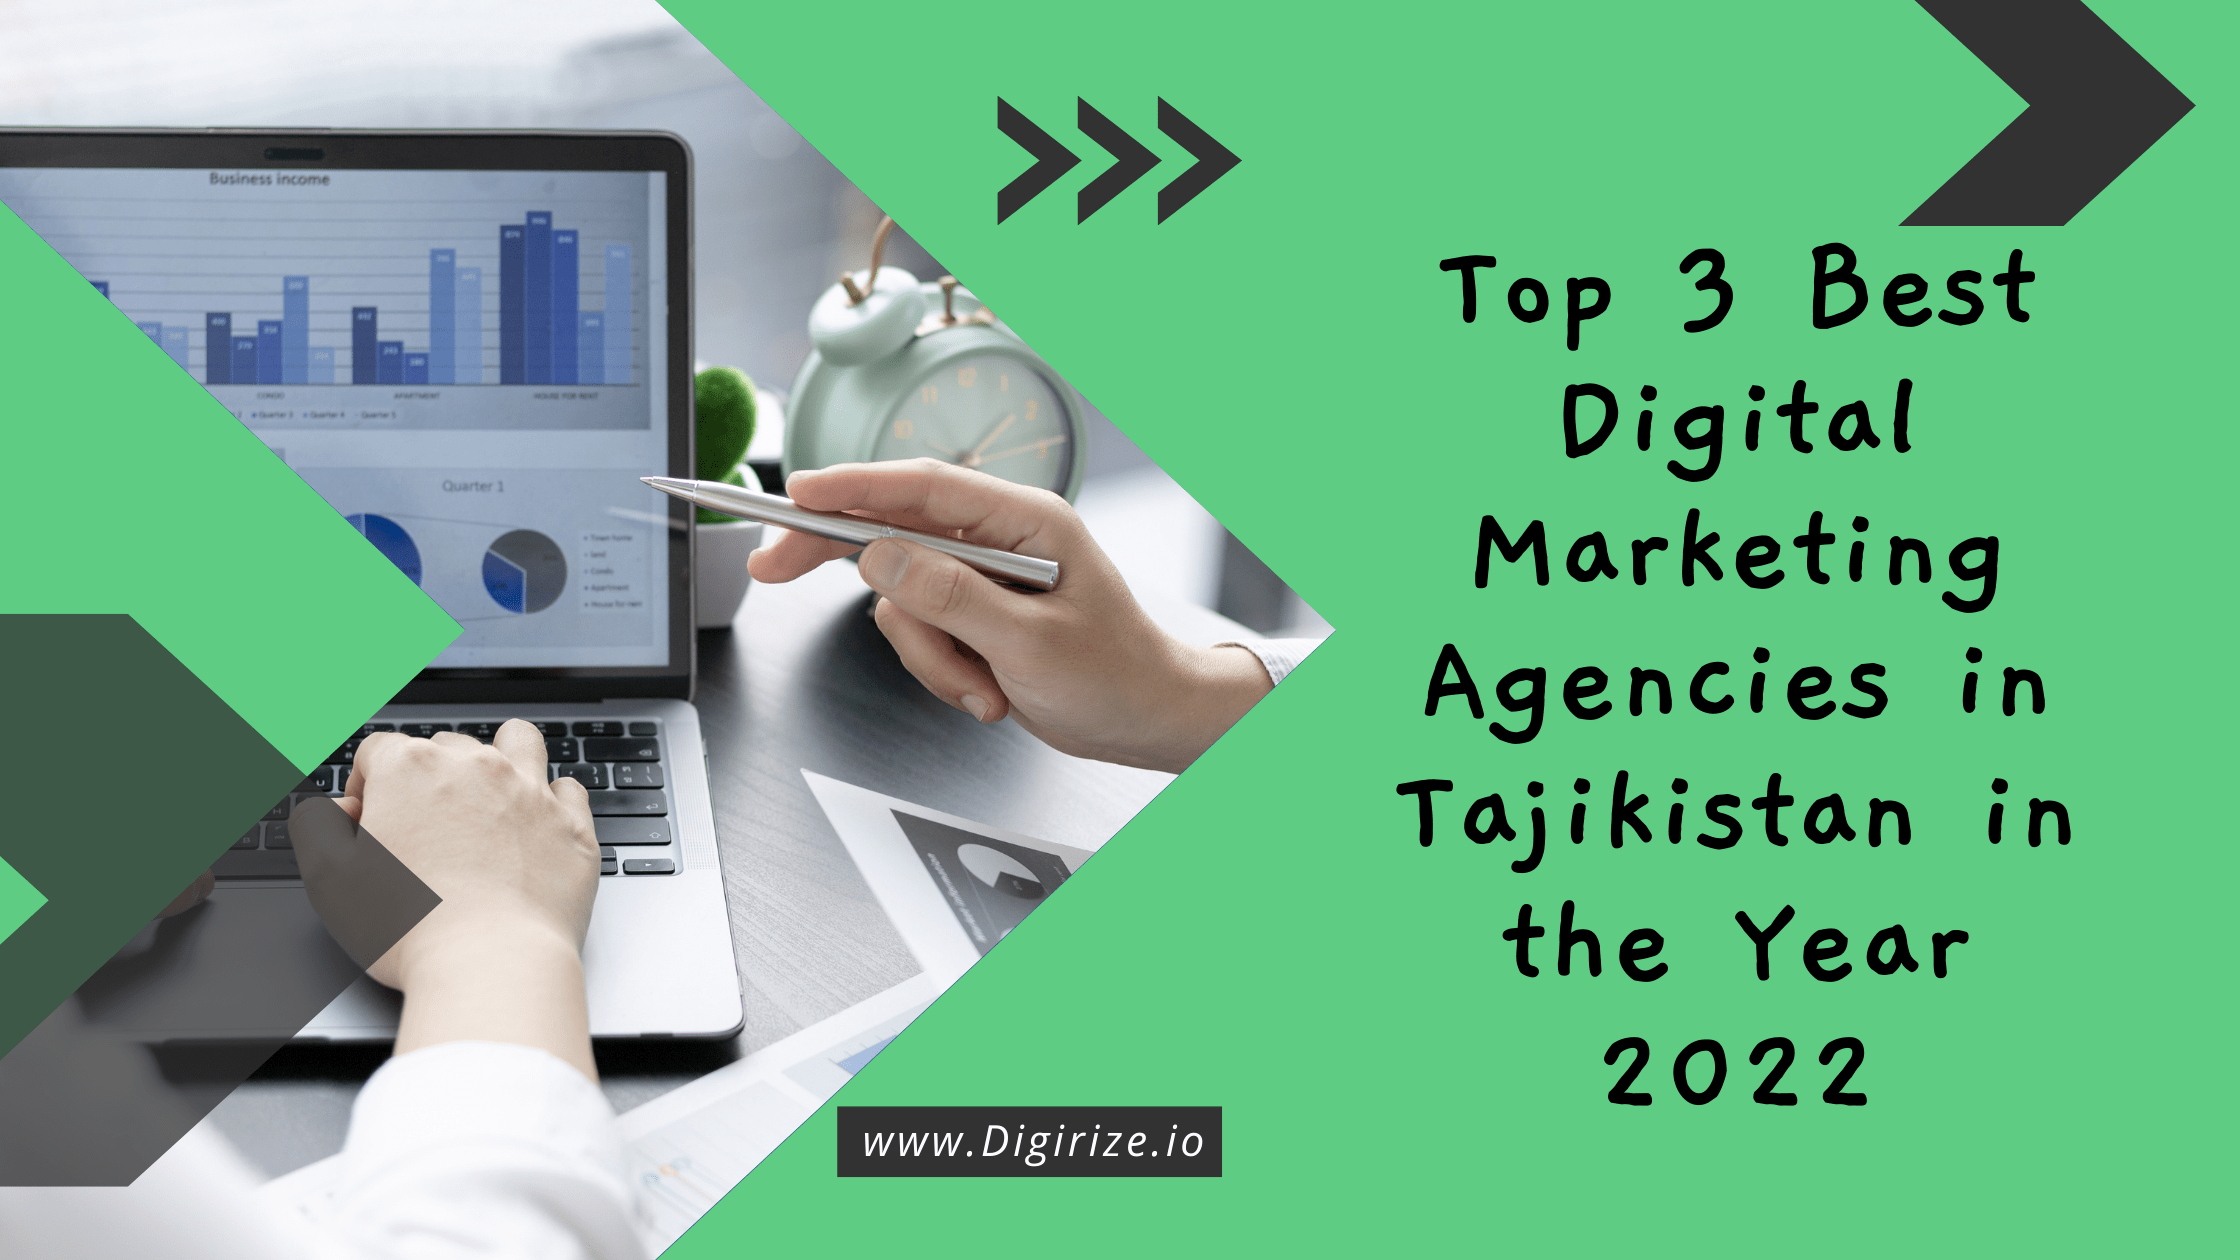 Top 3 Best Digital Marketing Agencies in Tajikistan in the Year 2022.